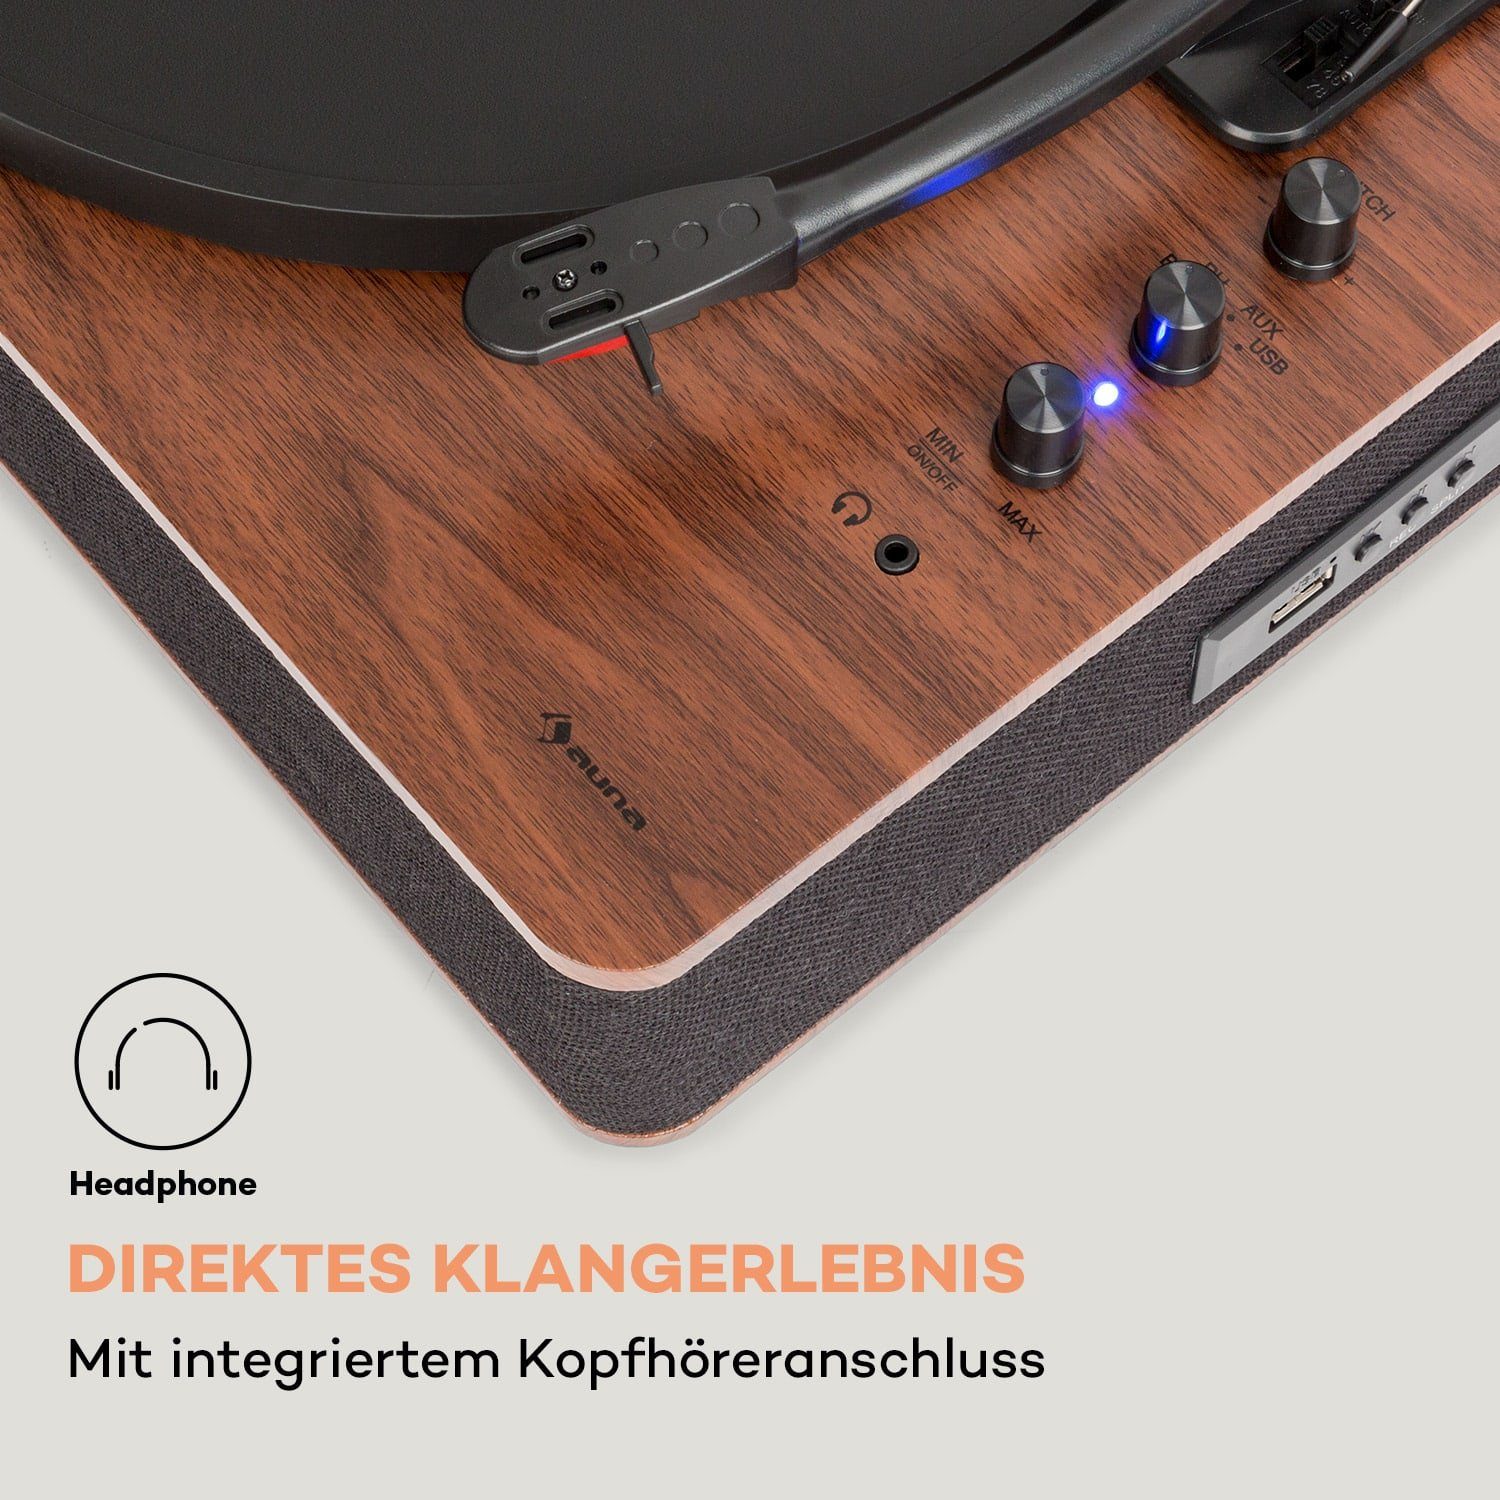 mit Plattenspieler) TT-Classic Vinyl Schallplattenspieler Bluetooth, Auna Lautsprecher Plus (Riemenantrieb, Plattenspieler